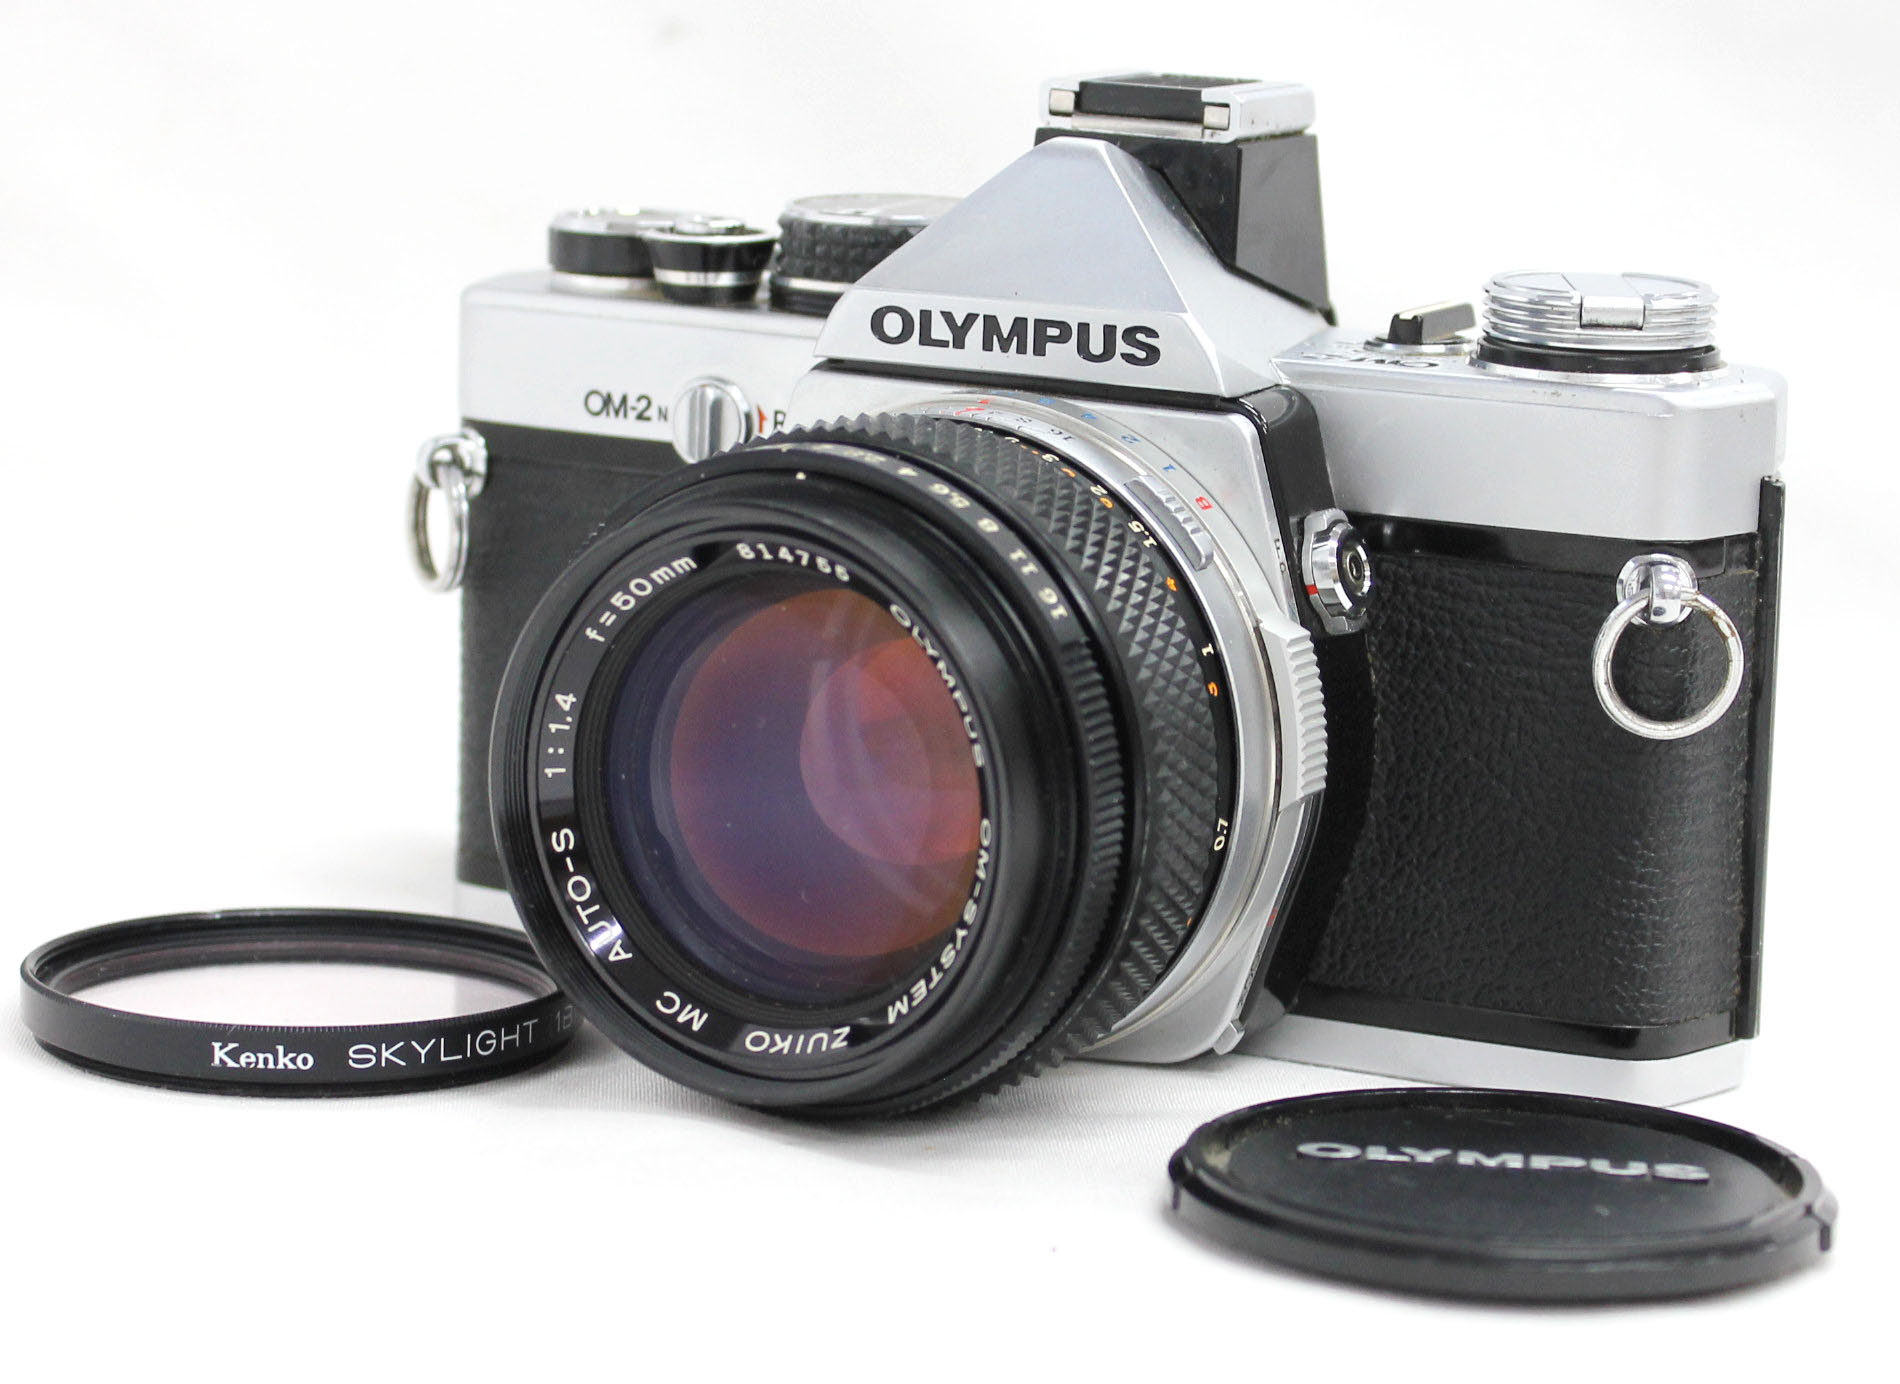 Olympus OM-2N 35mm SLR Film Camera with OM-System Zuiko MC AUTO-S 50mm F/1.4 Lens from Japan